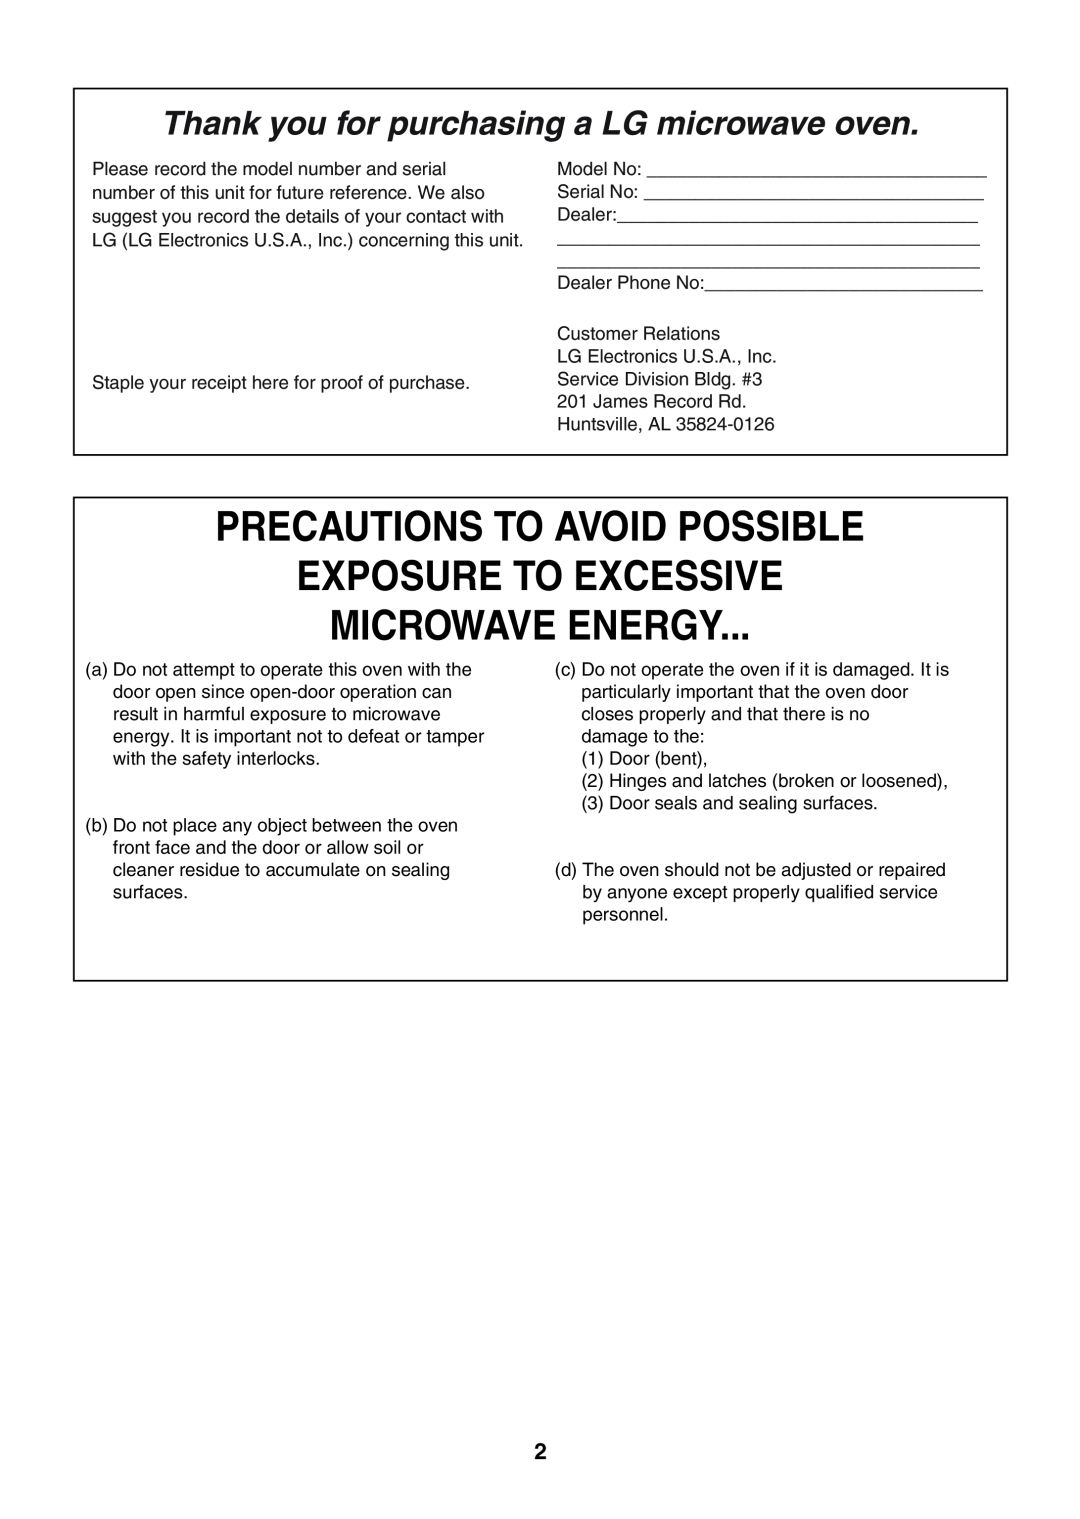 Minolta LMVM2085SB owner manual Precautions To Avoid Possible Exposure To Excessive Microwave Energy 